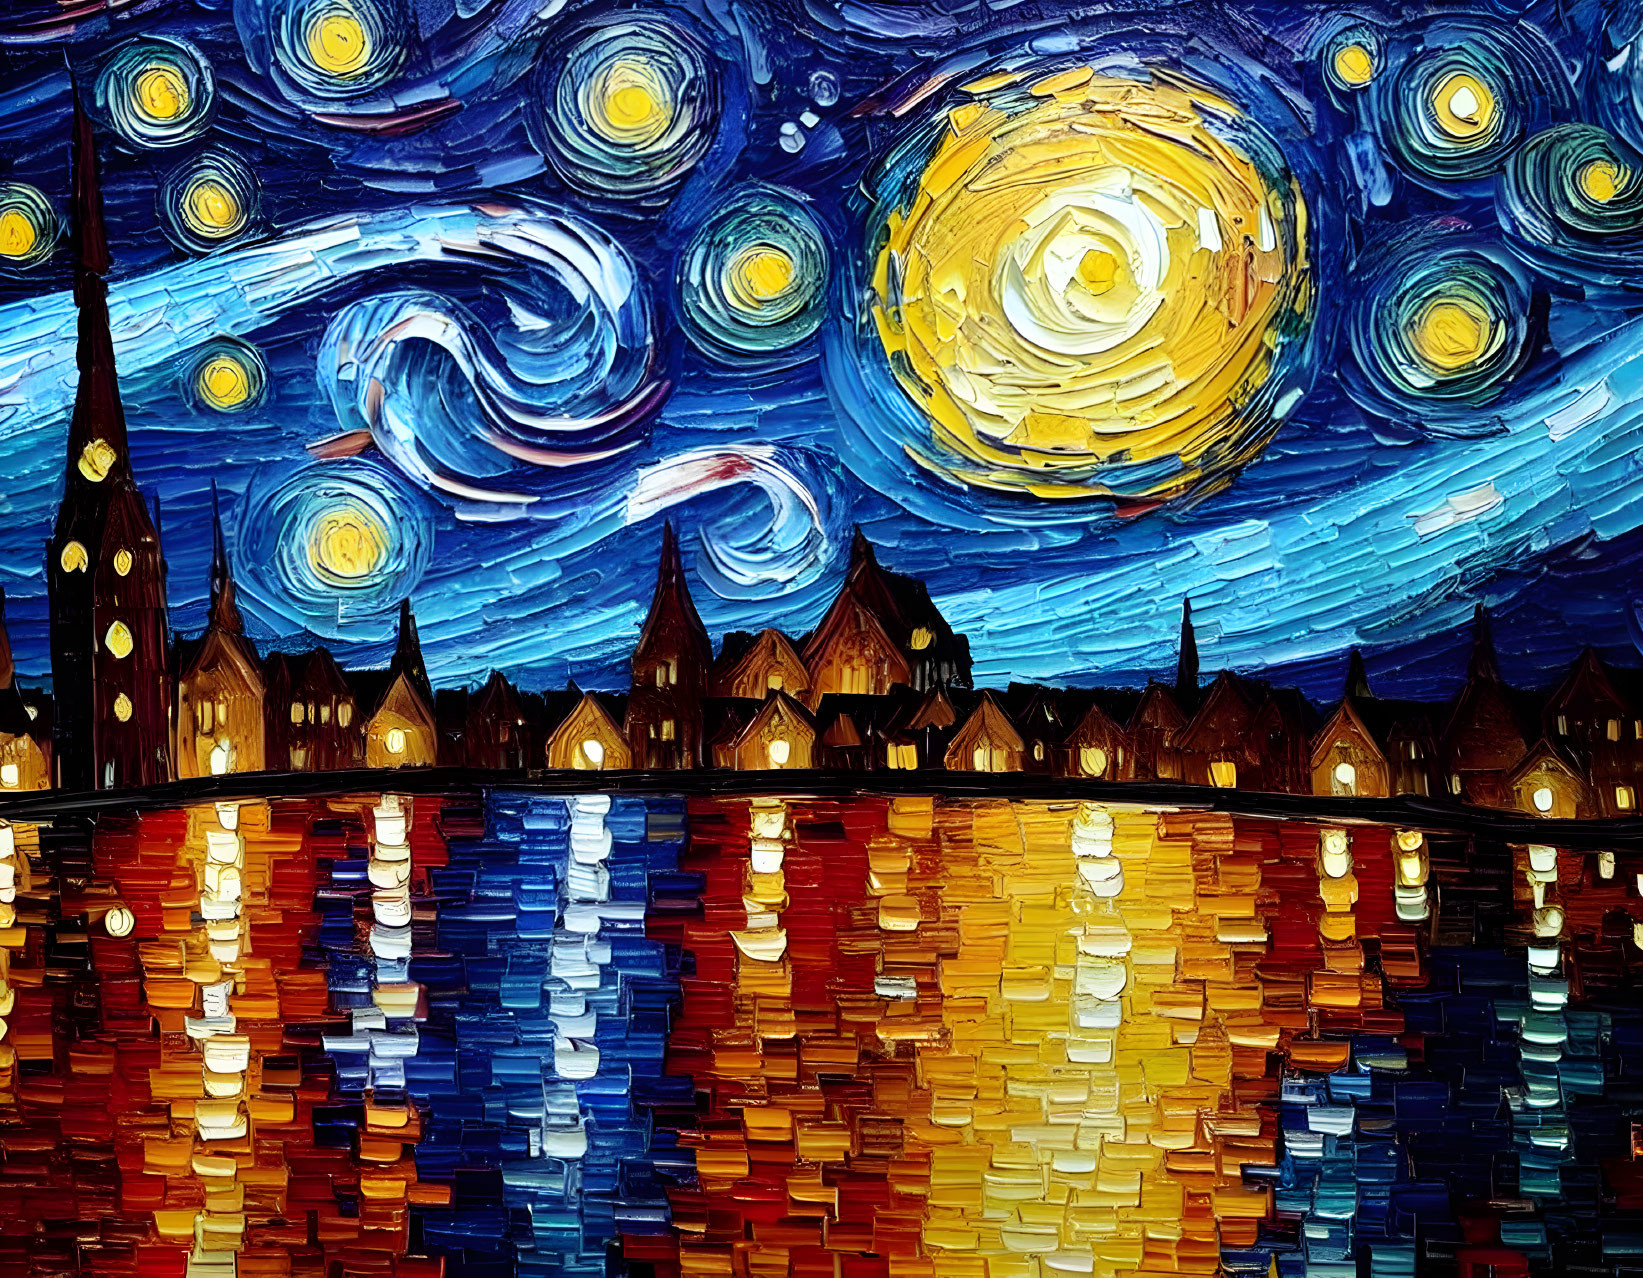 Starry Night in the Seaside Town (Van Gogh Style)